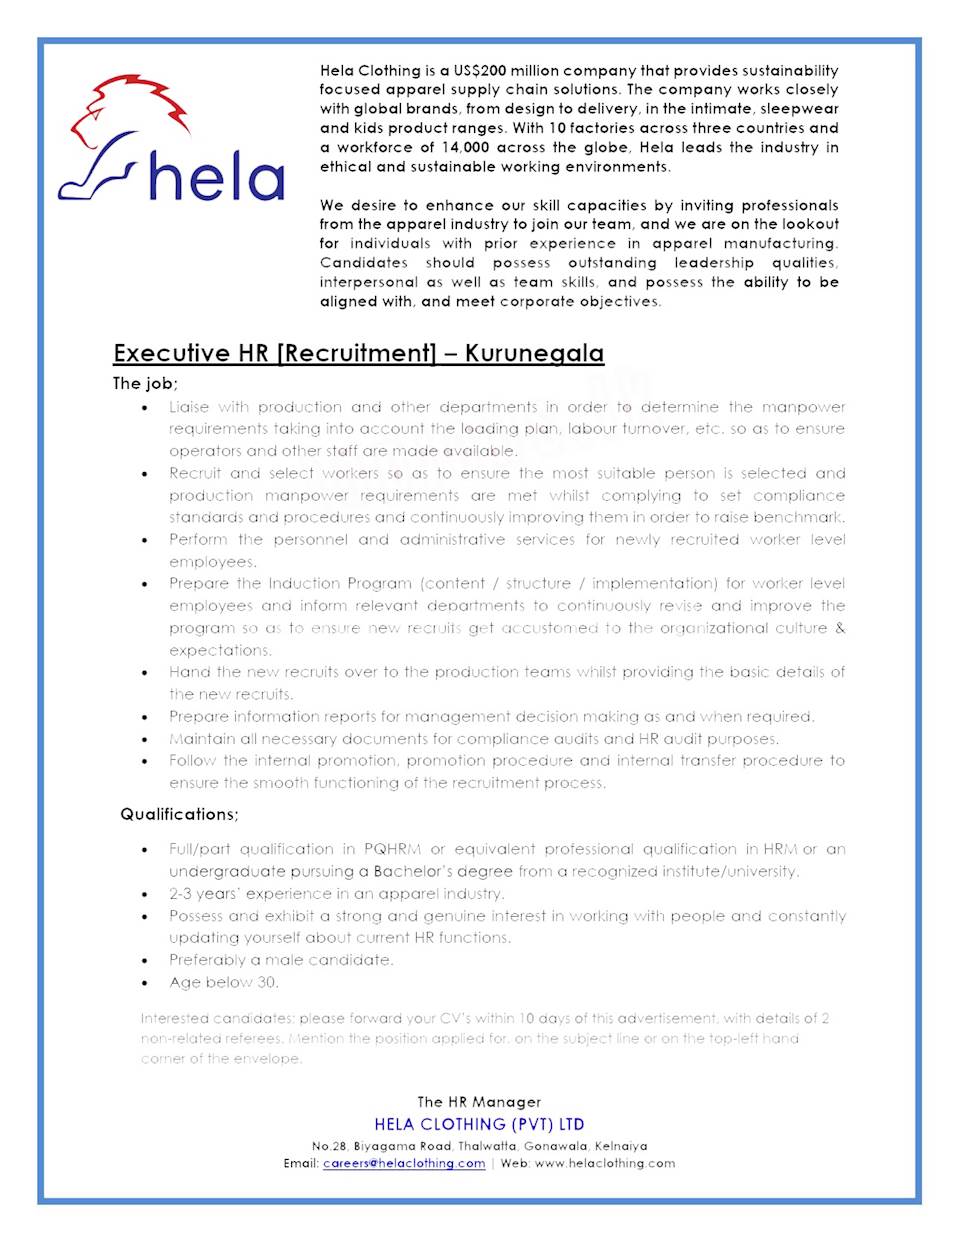 Executive HR (Recruitment) - Kurunegala